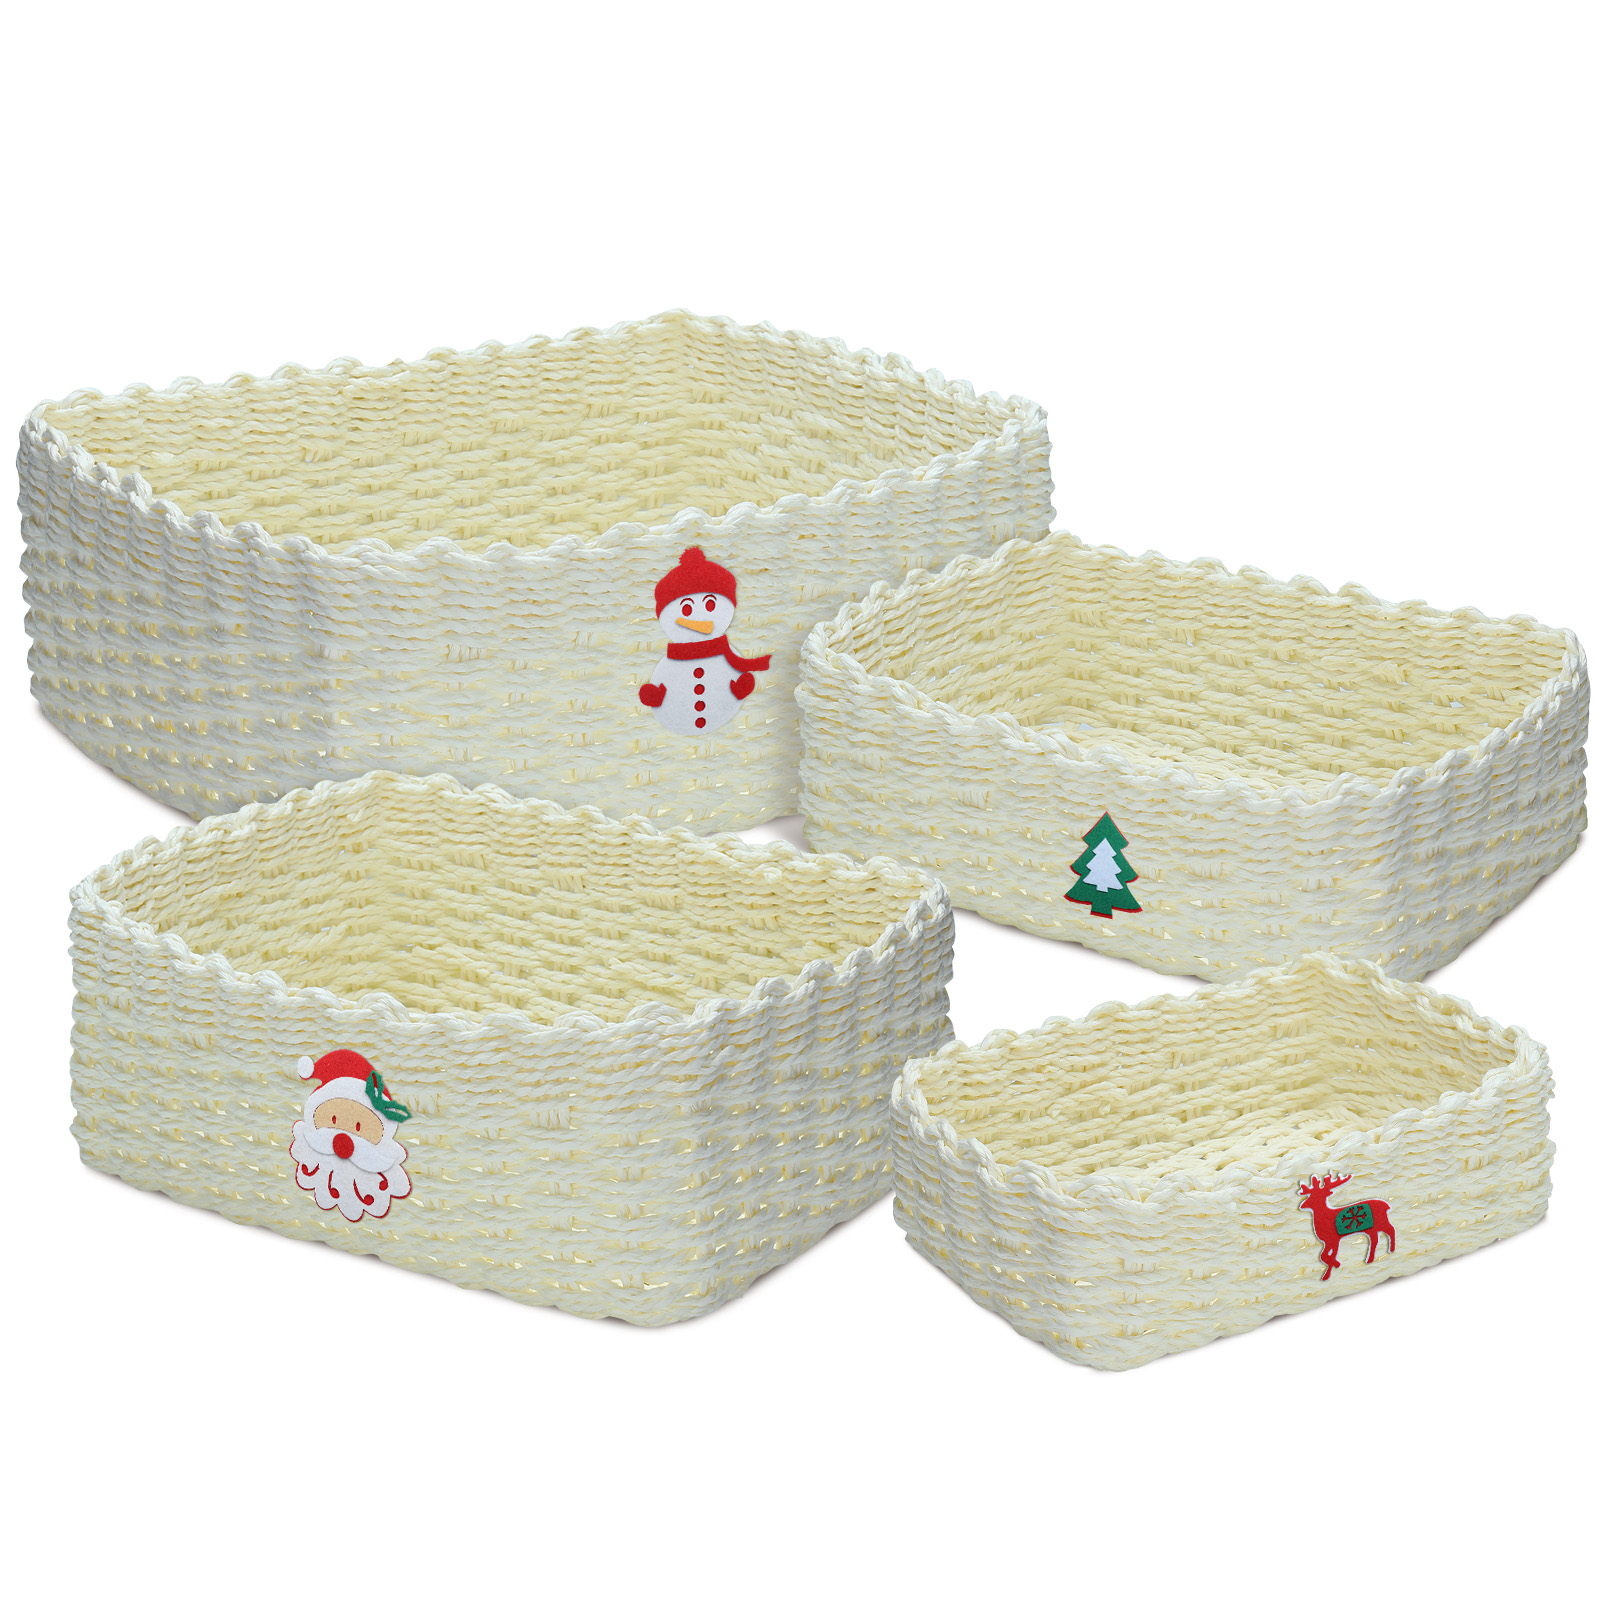 KING-DO-WAY-4PCS-Christmas-Handmade-Woven-Storage-Basket-Set-Durable-Eco-friendly-Storage-Basket-1891489-21